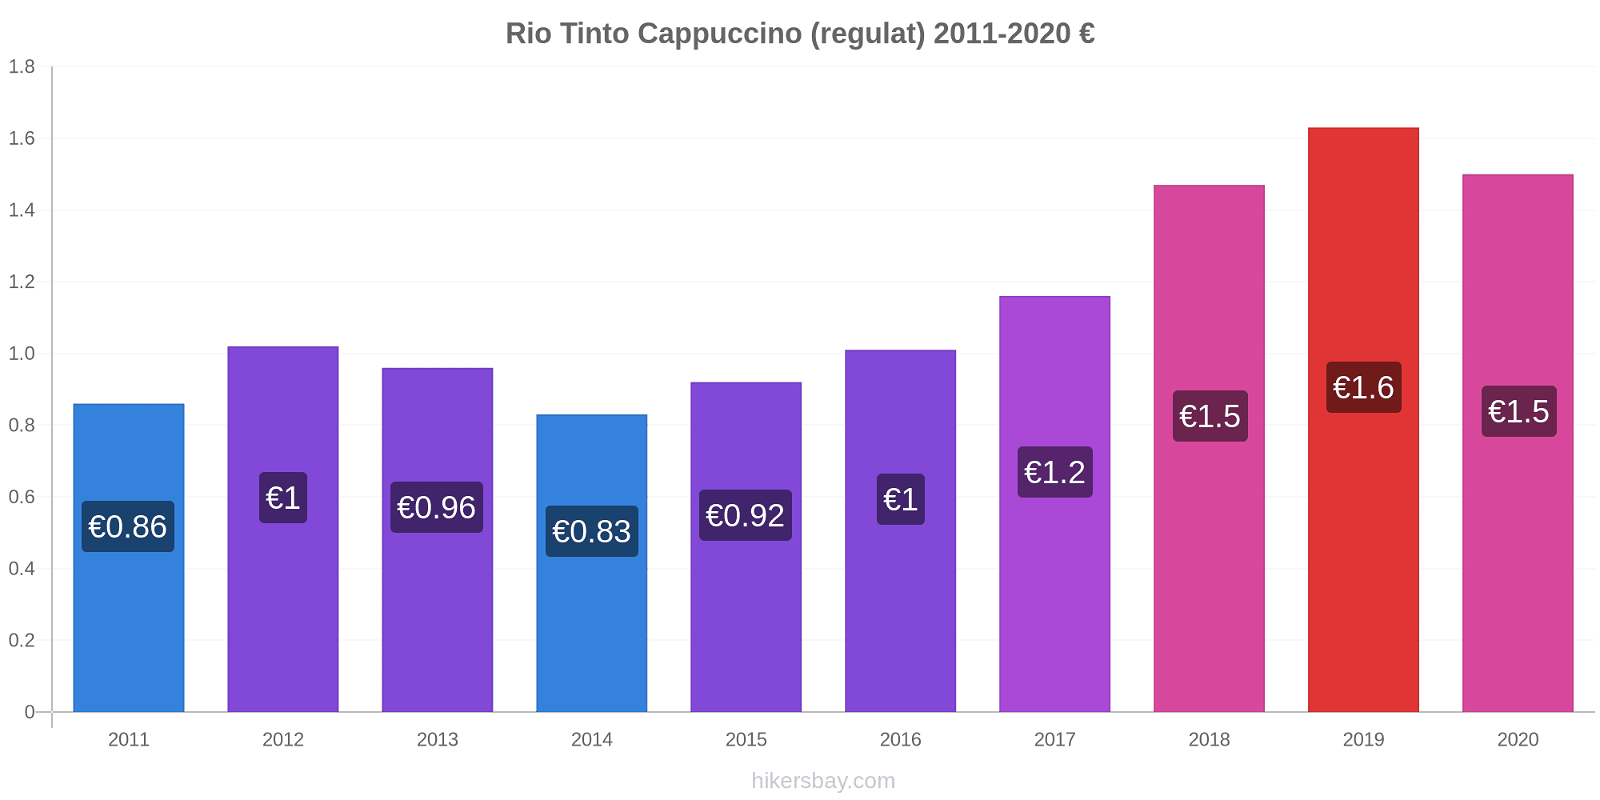 Rio Tinto modificări de preț Cappuccino (regulat) hikersbay.com